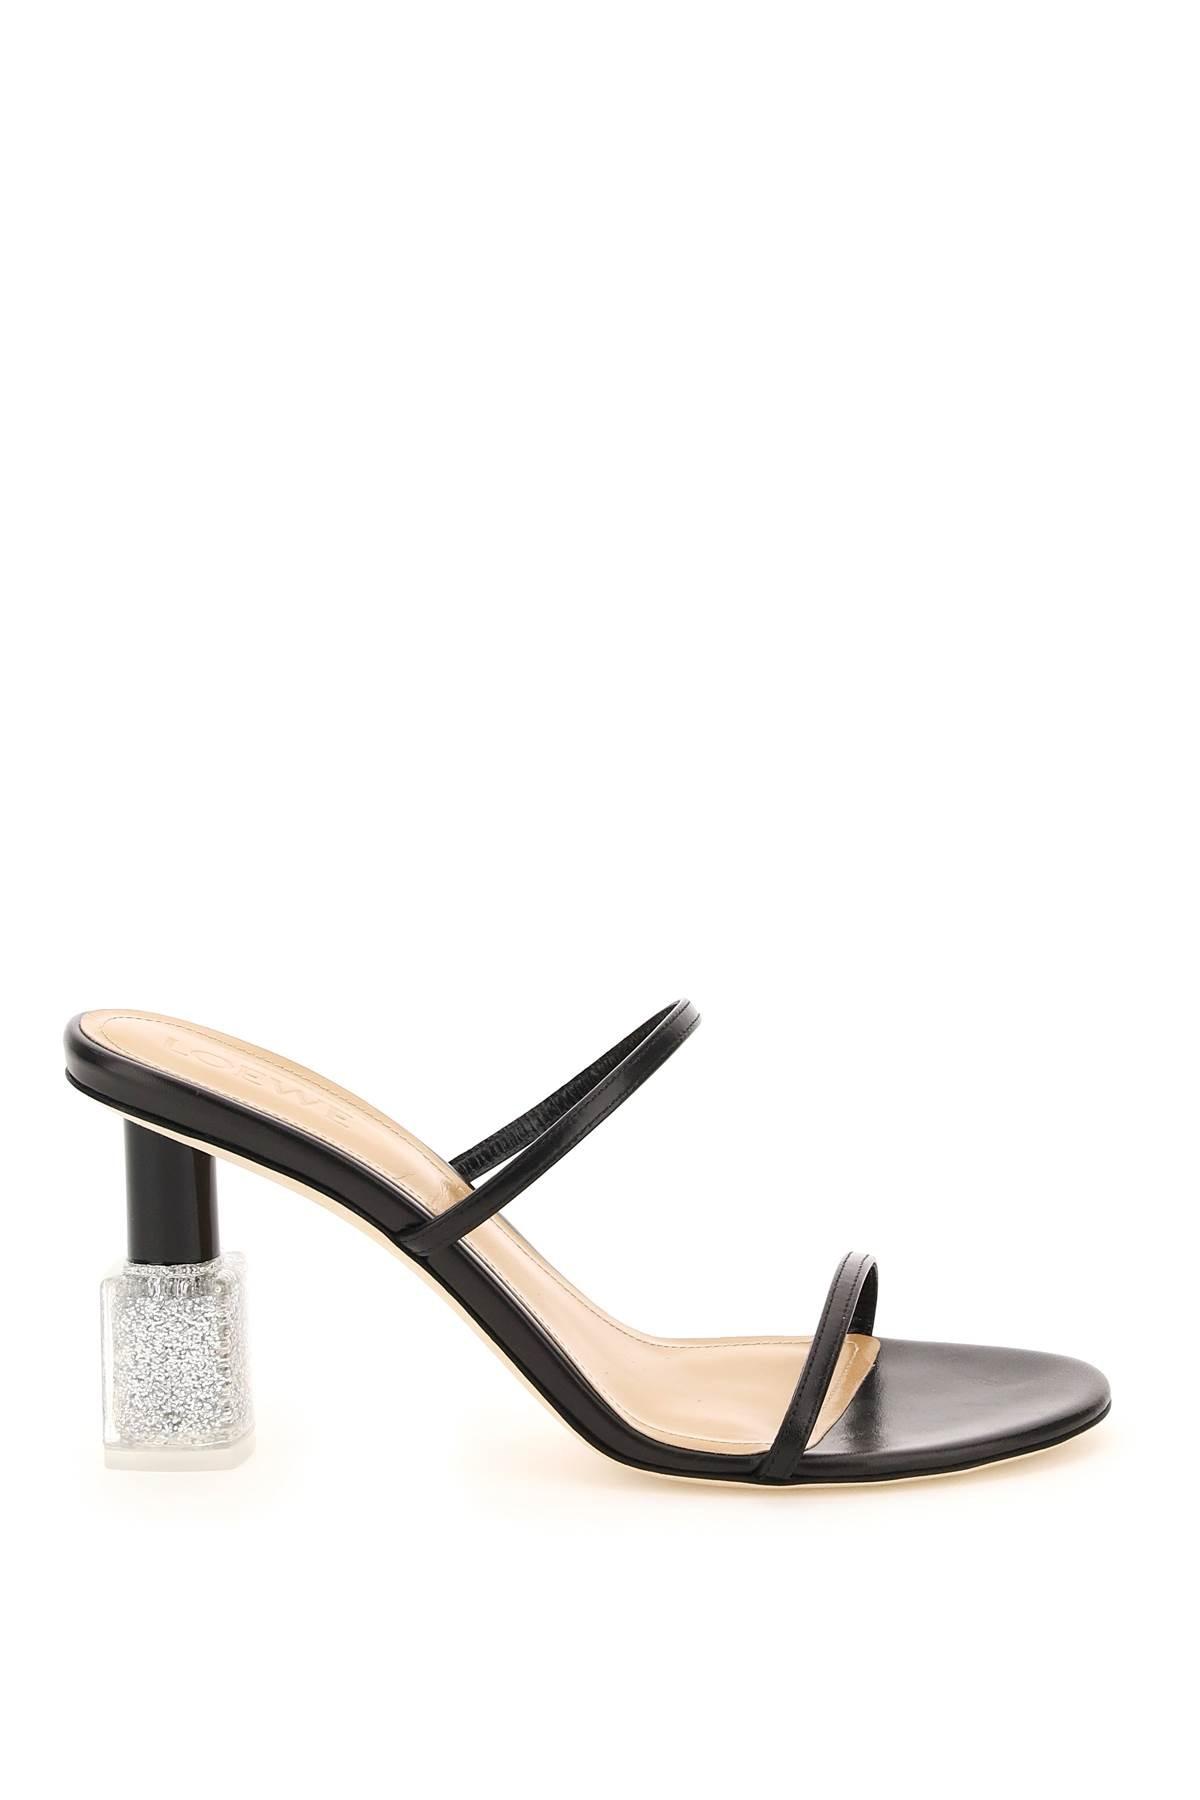 Loewe Nail Polish Heel Sandals in White | Lyst